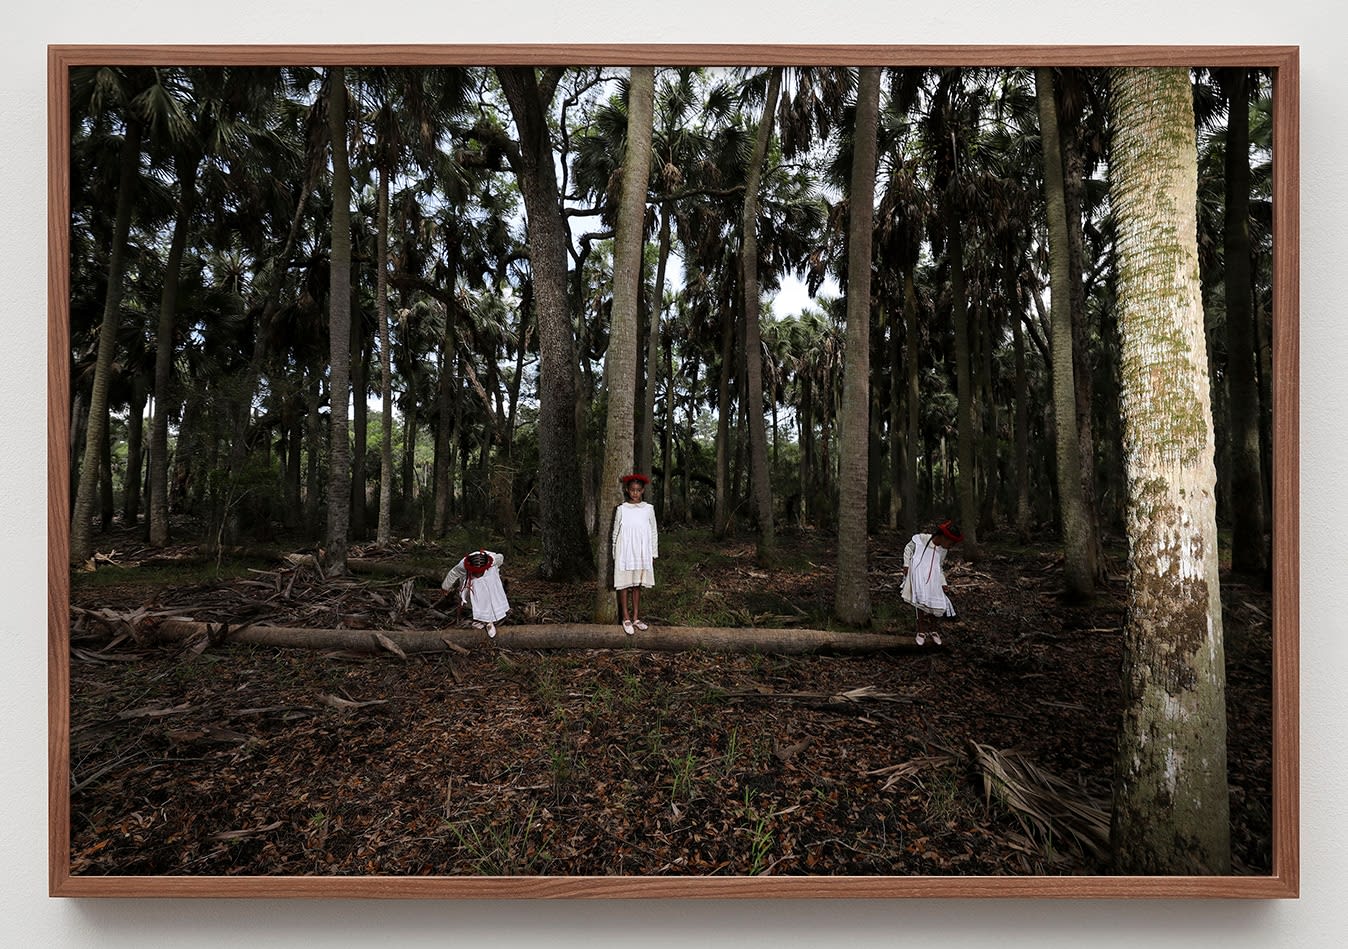 Allison Janae Hamilton, Three girls in sabal palm forest II, 2019